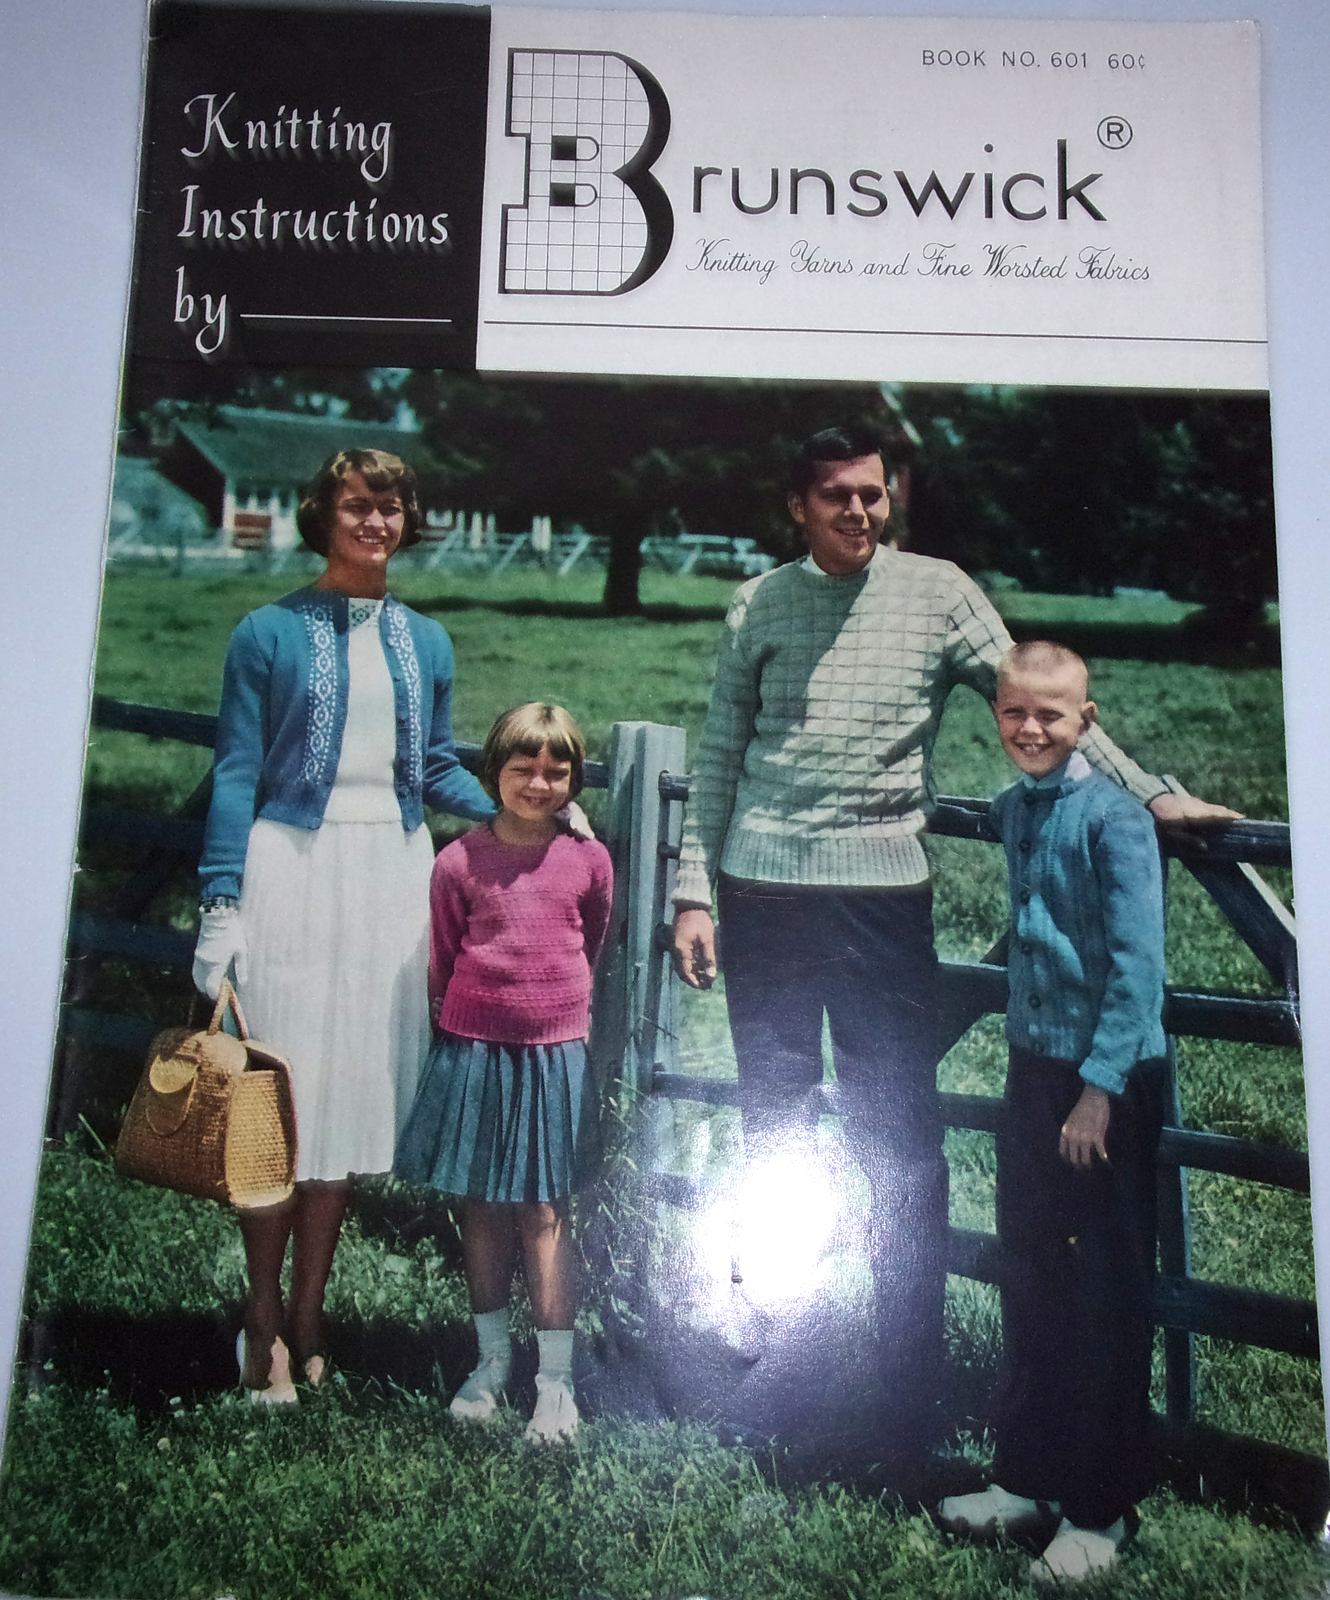 Knitting Instructions by Brunswick Book No. 601  - $3.99